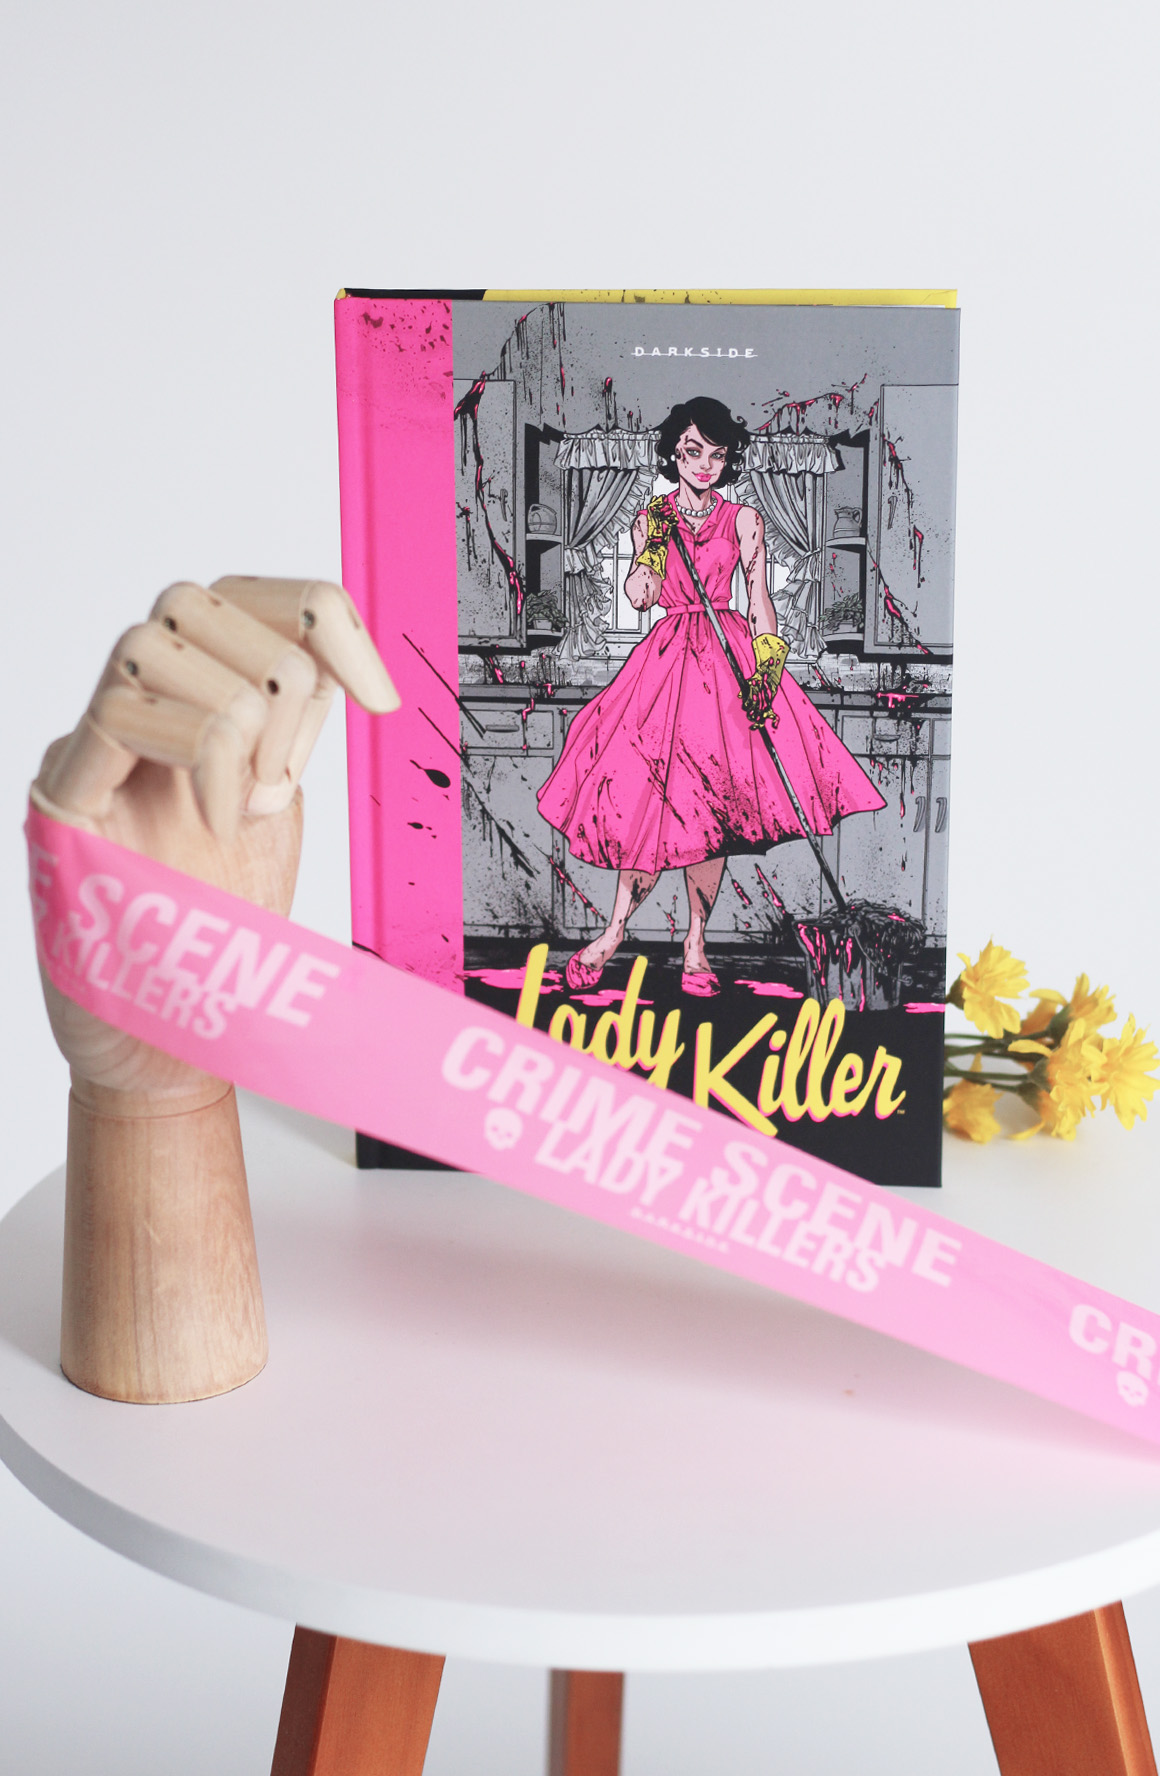 Lady Killer Quadrinhos Darkside Books